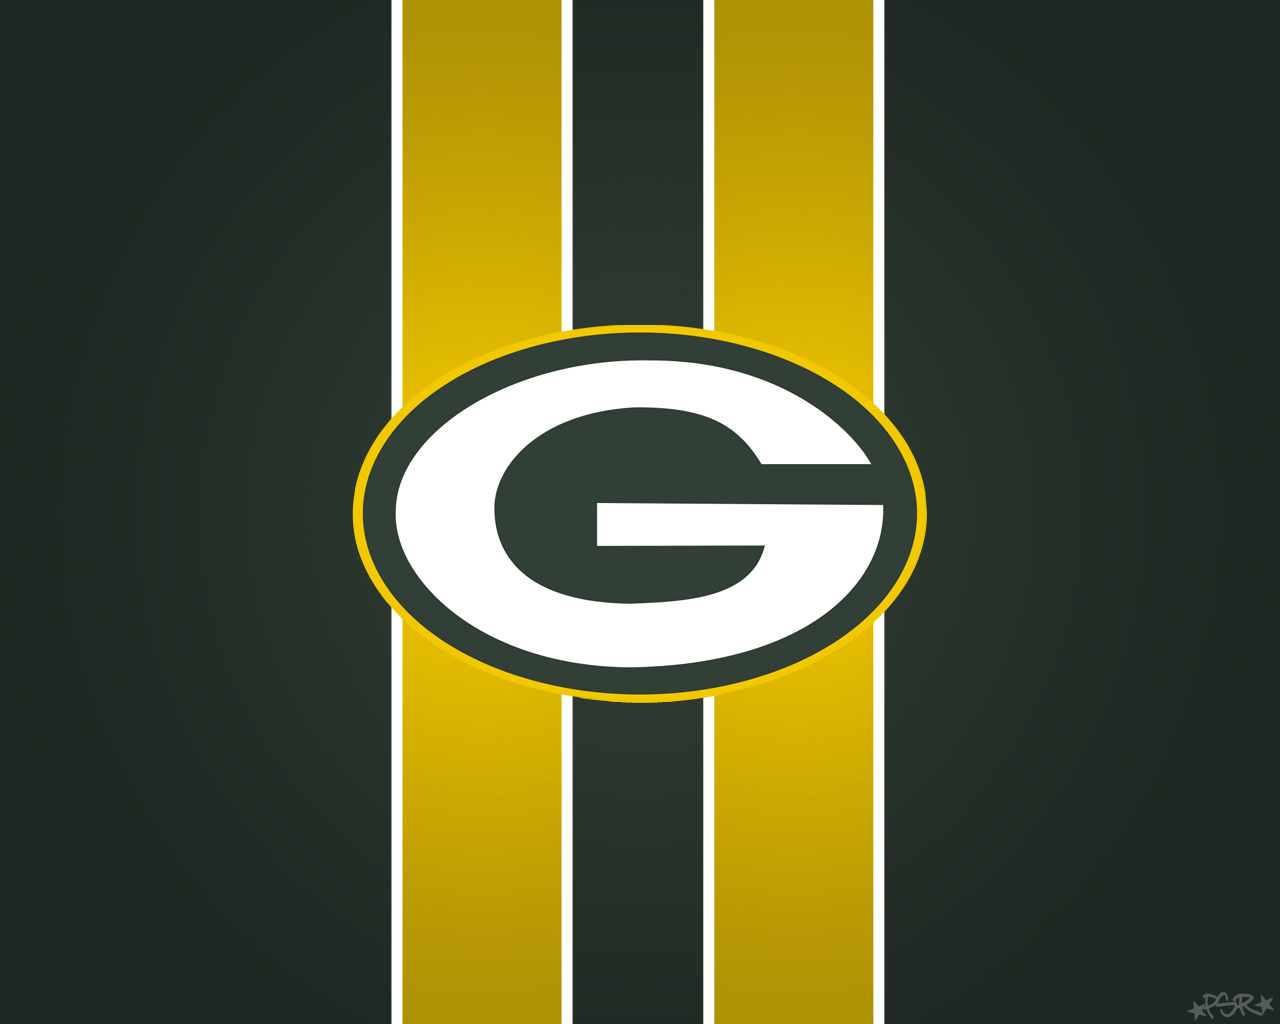 Green Bay Packers Desktop Image Wallpaper